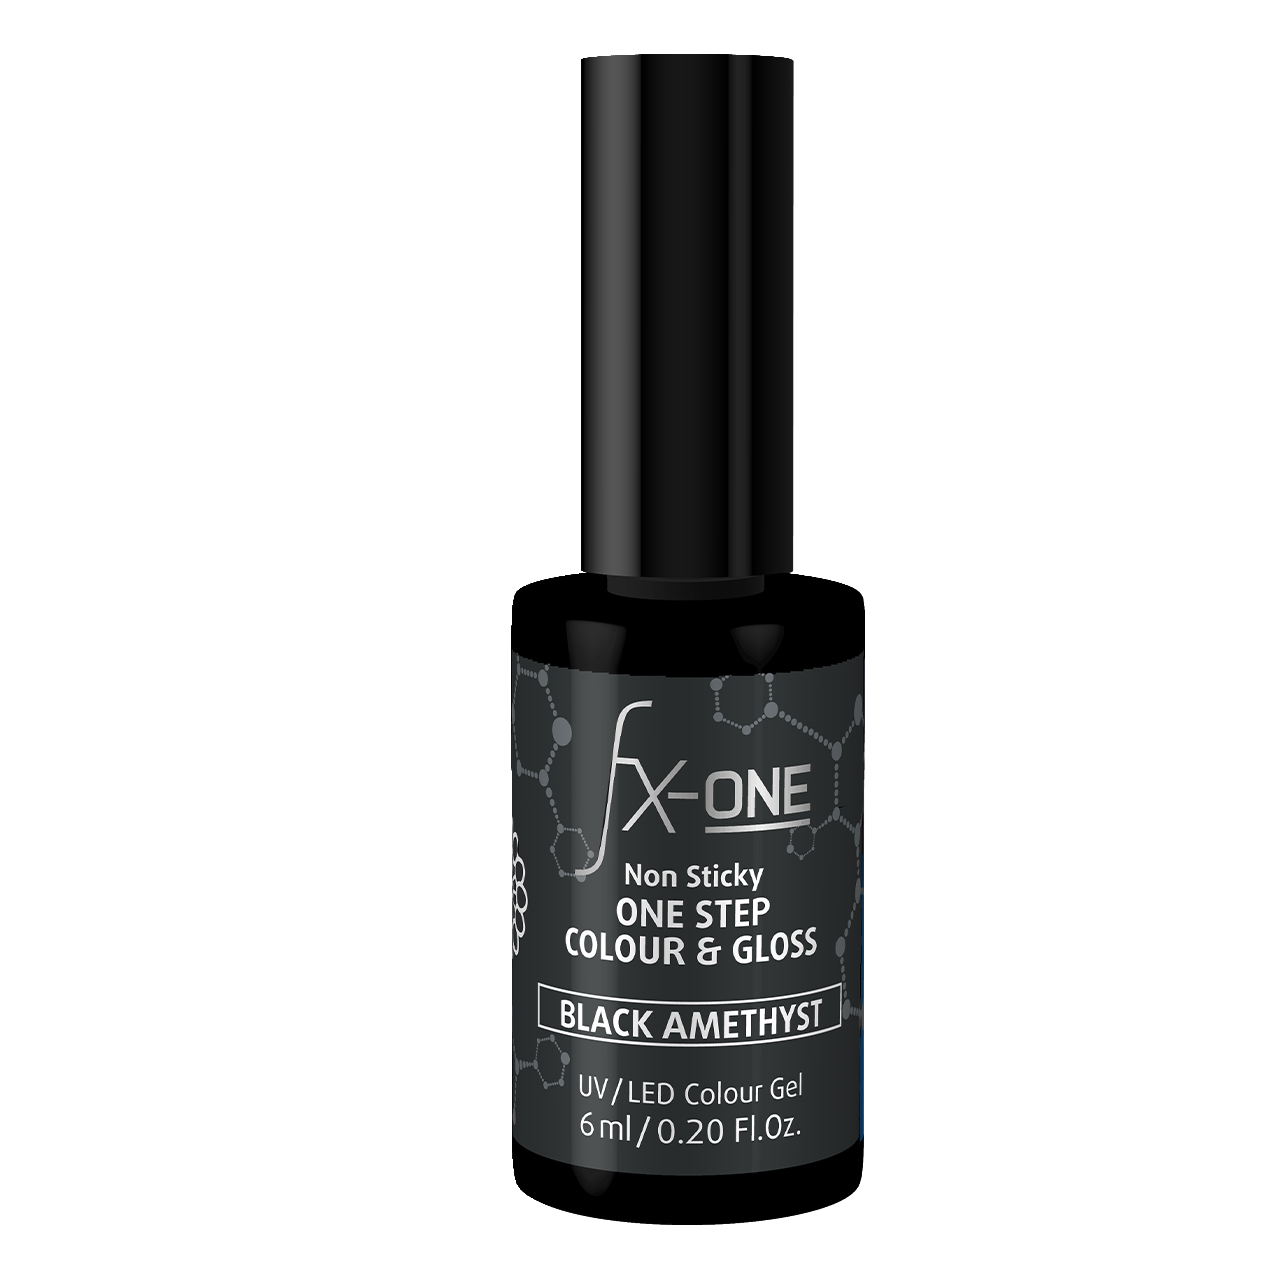 FX-ONE Colour & Gloss Black Amethyst 6 Ml